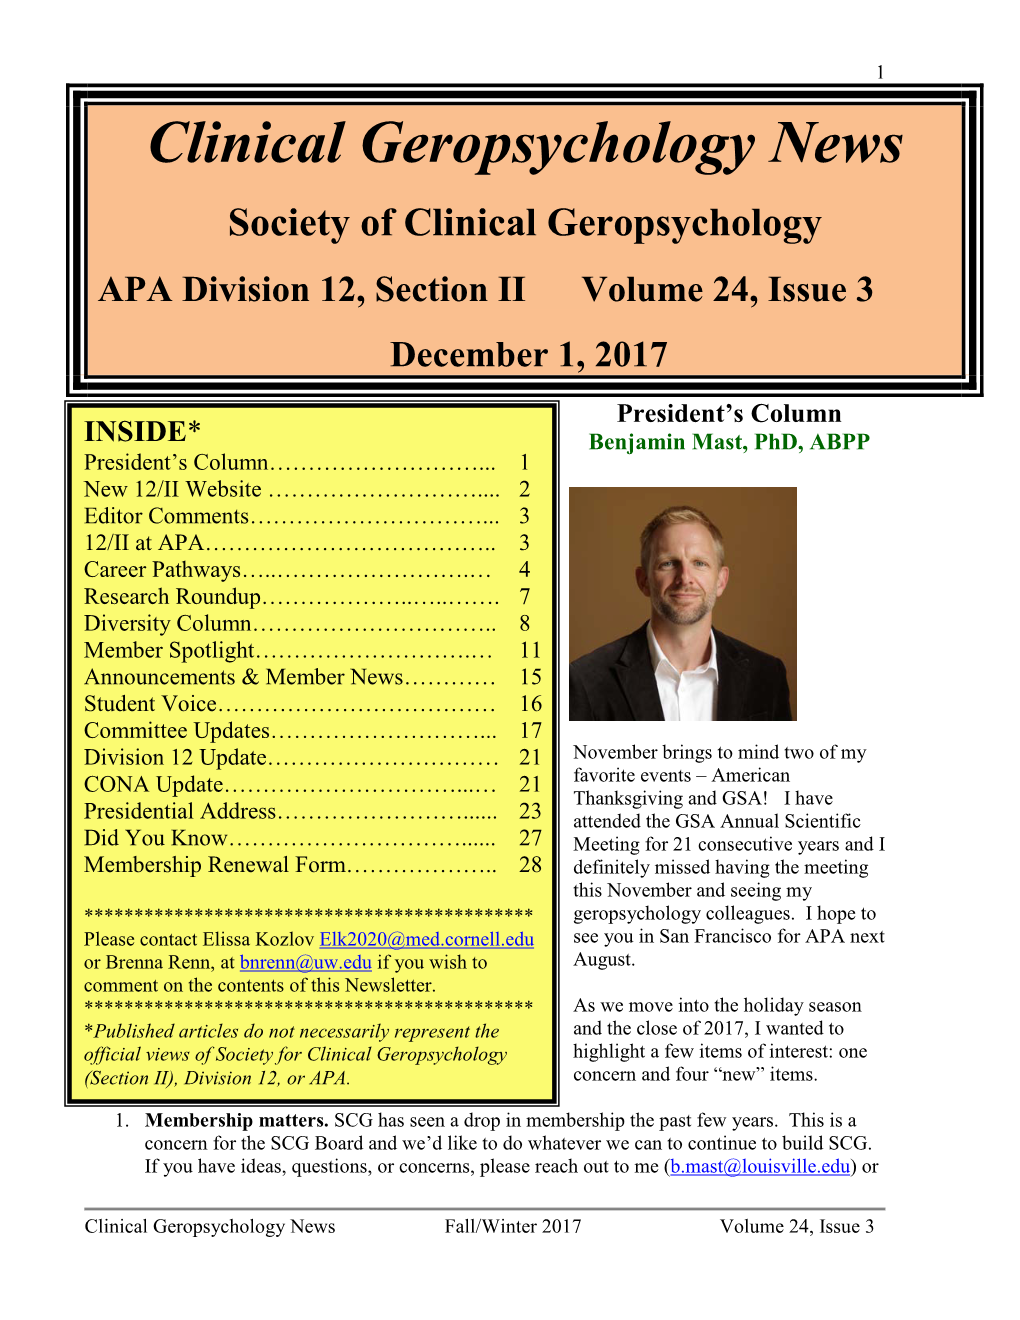 Clinical Geropsychology News